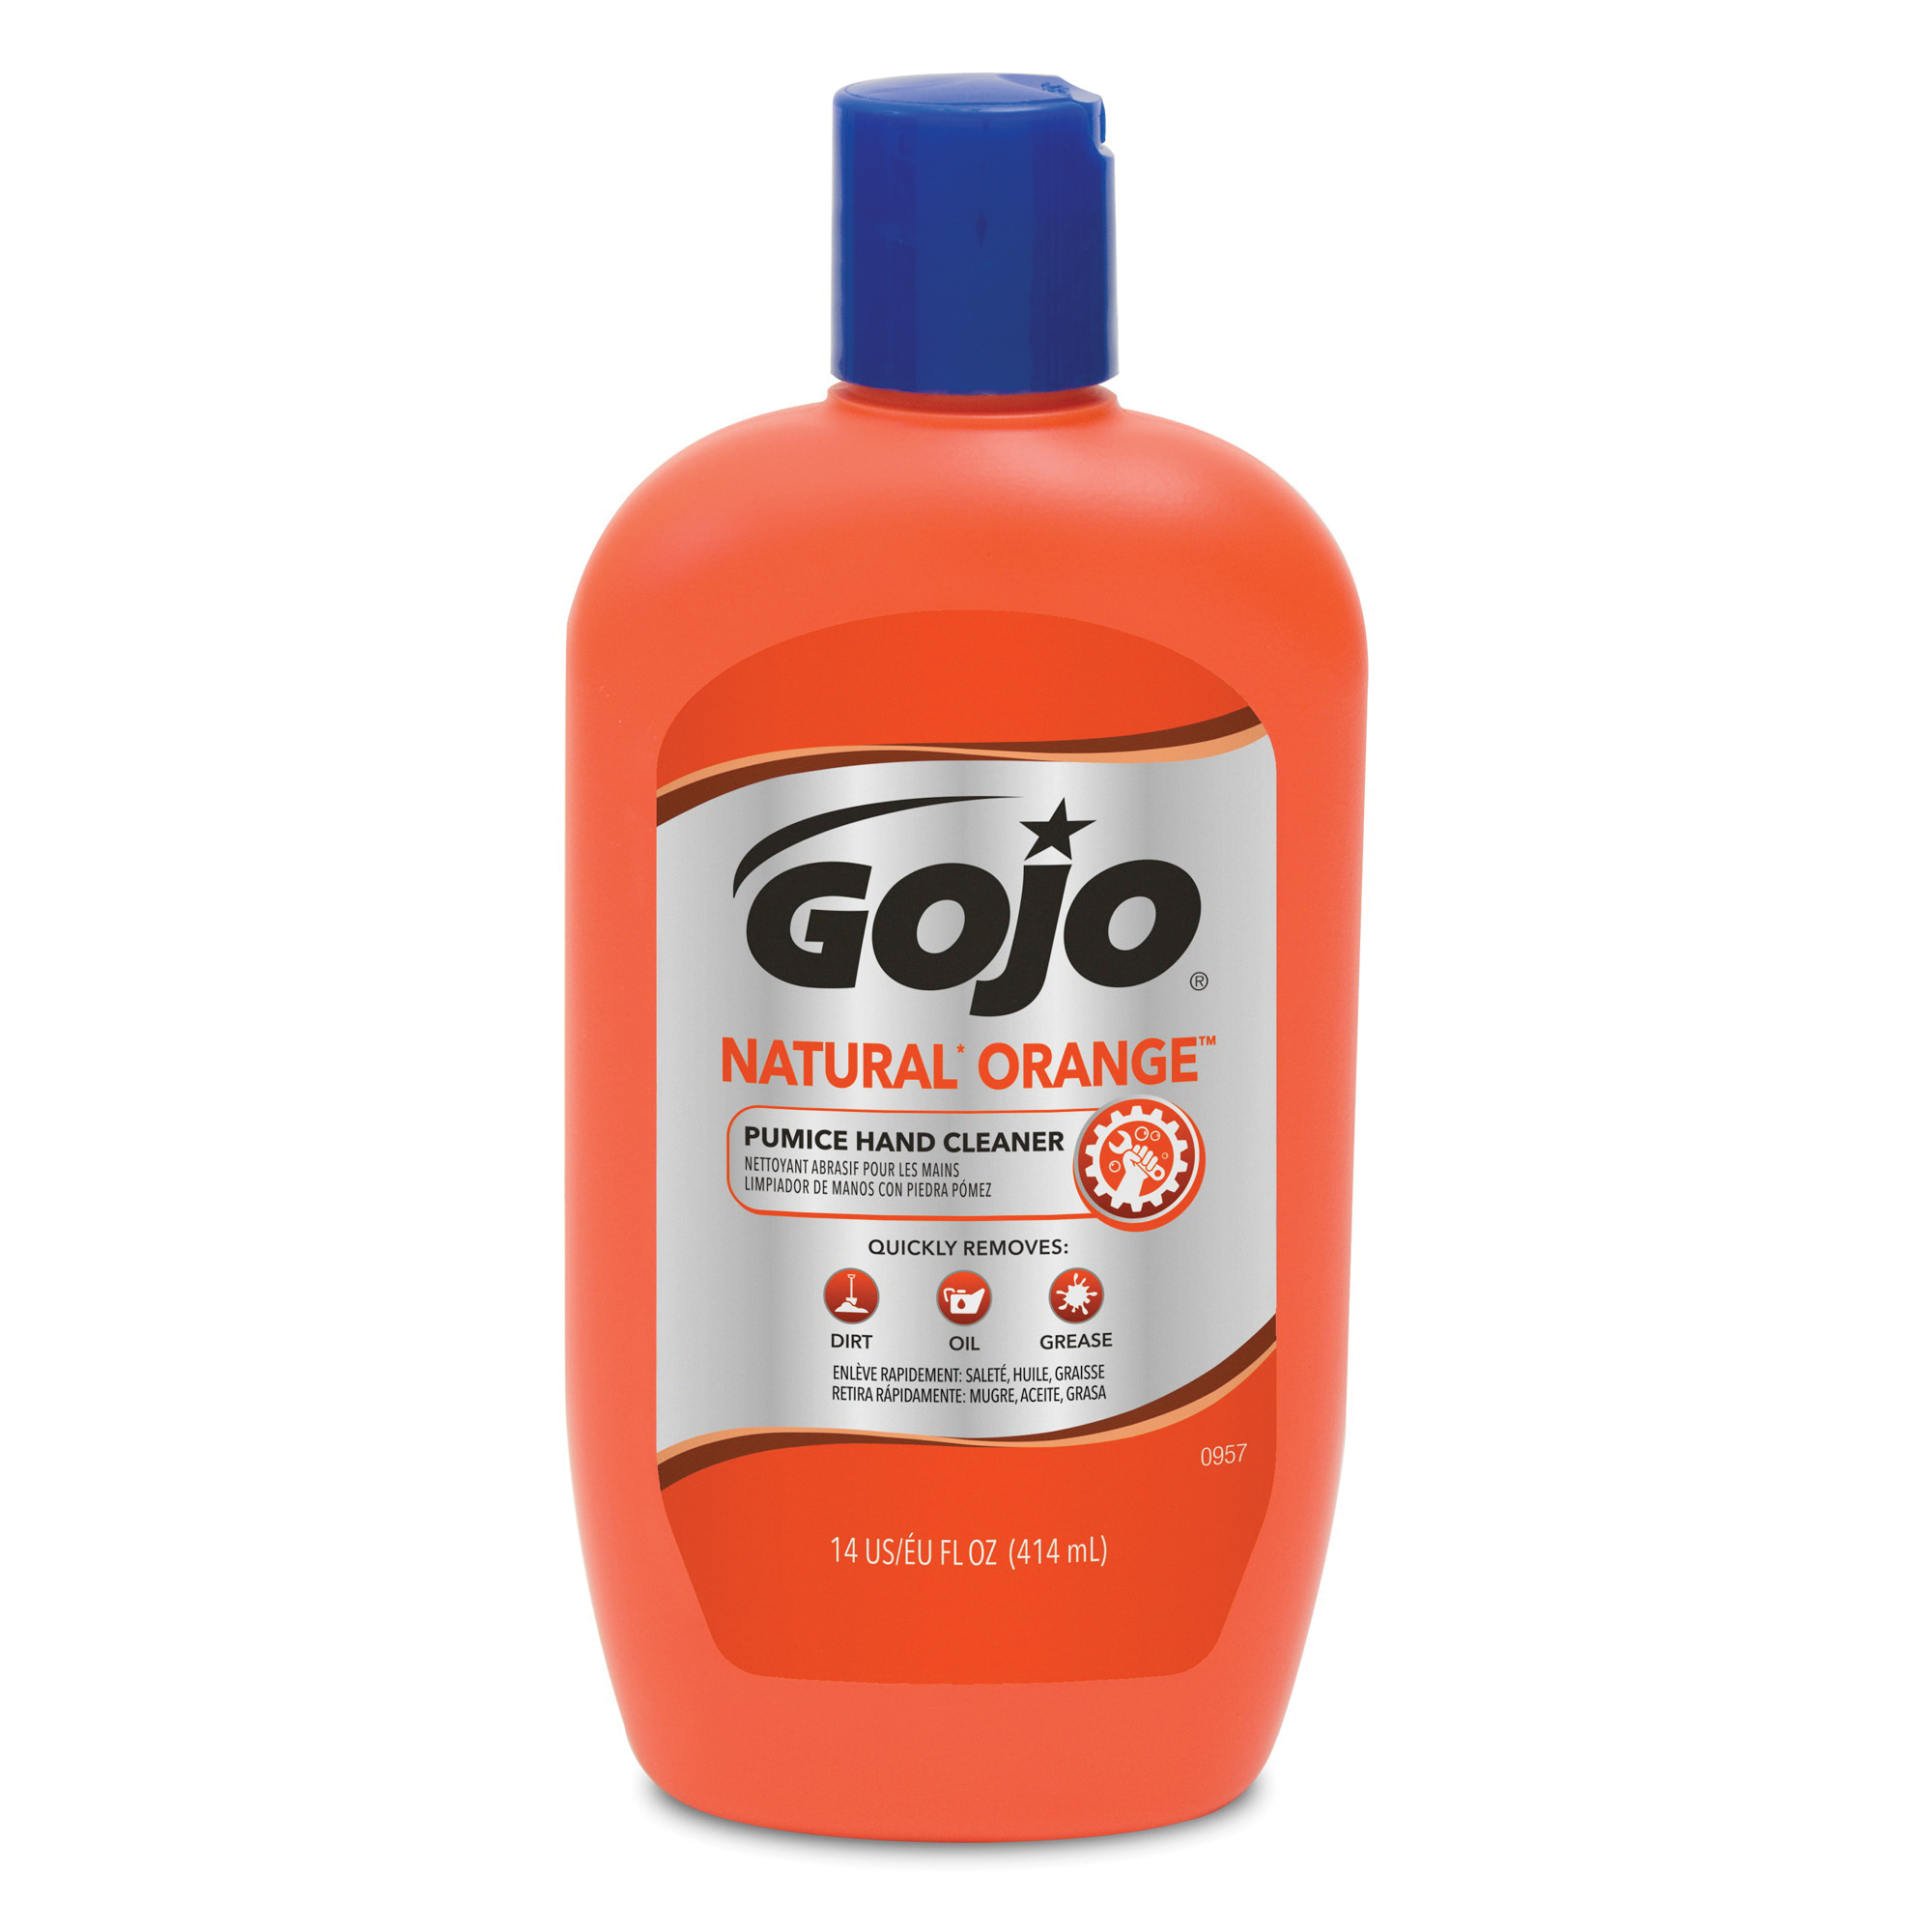 GOJO® 0957-12 NATURAL ORANGE™ Pumice Hand Cleaner, 14 fl-oz Nominal, Squeeze Bottle Package, Liquid Form, Citrus Odor/Scent, Orange